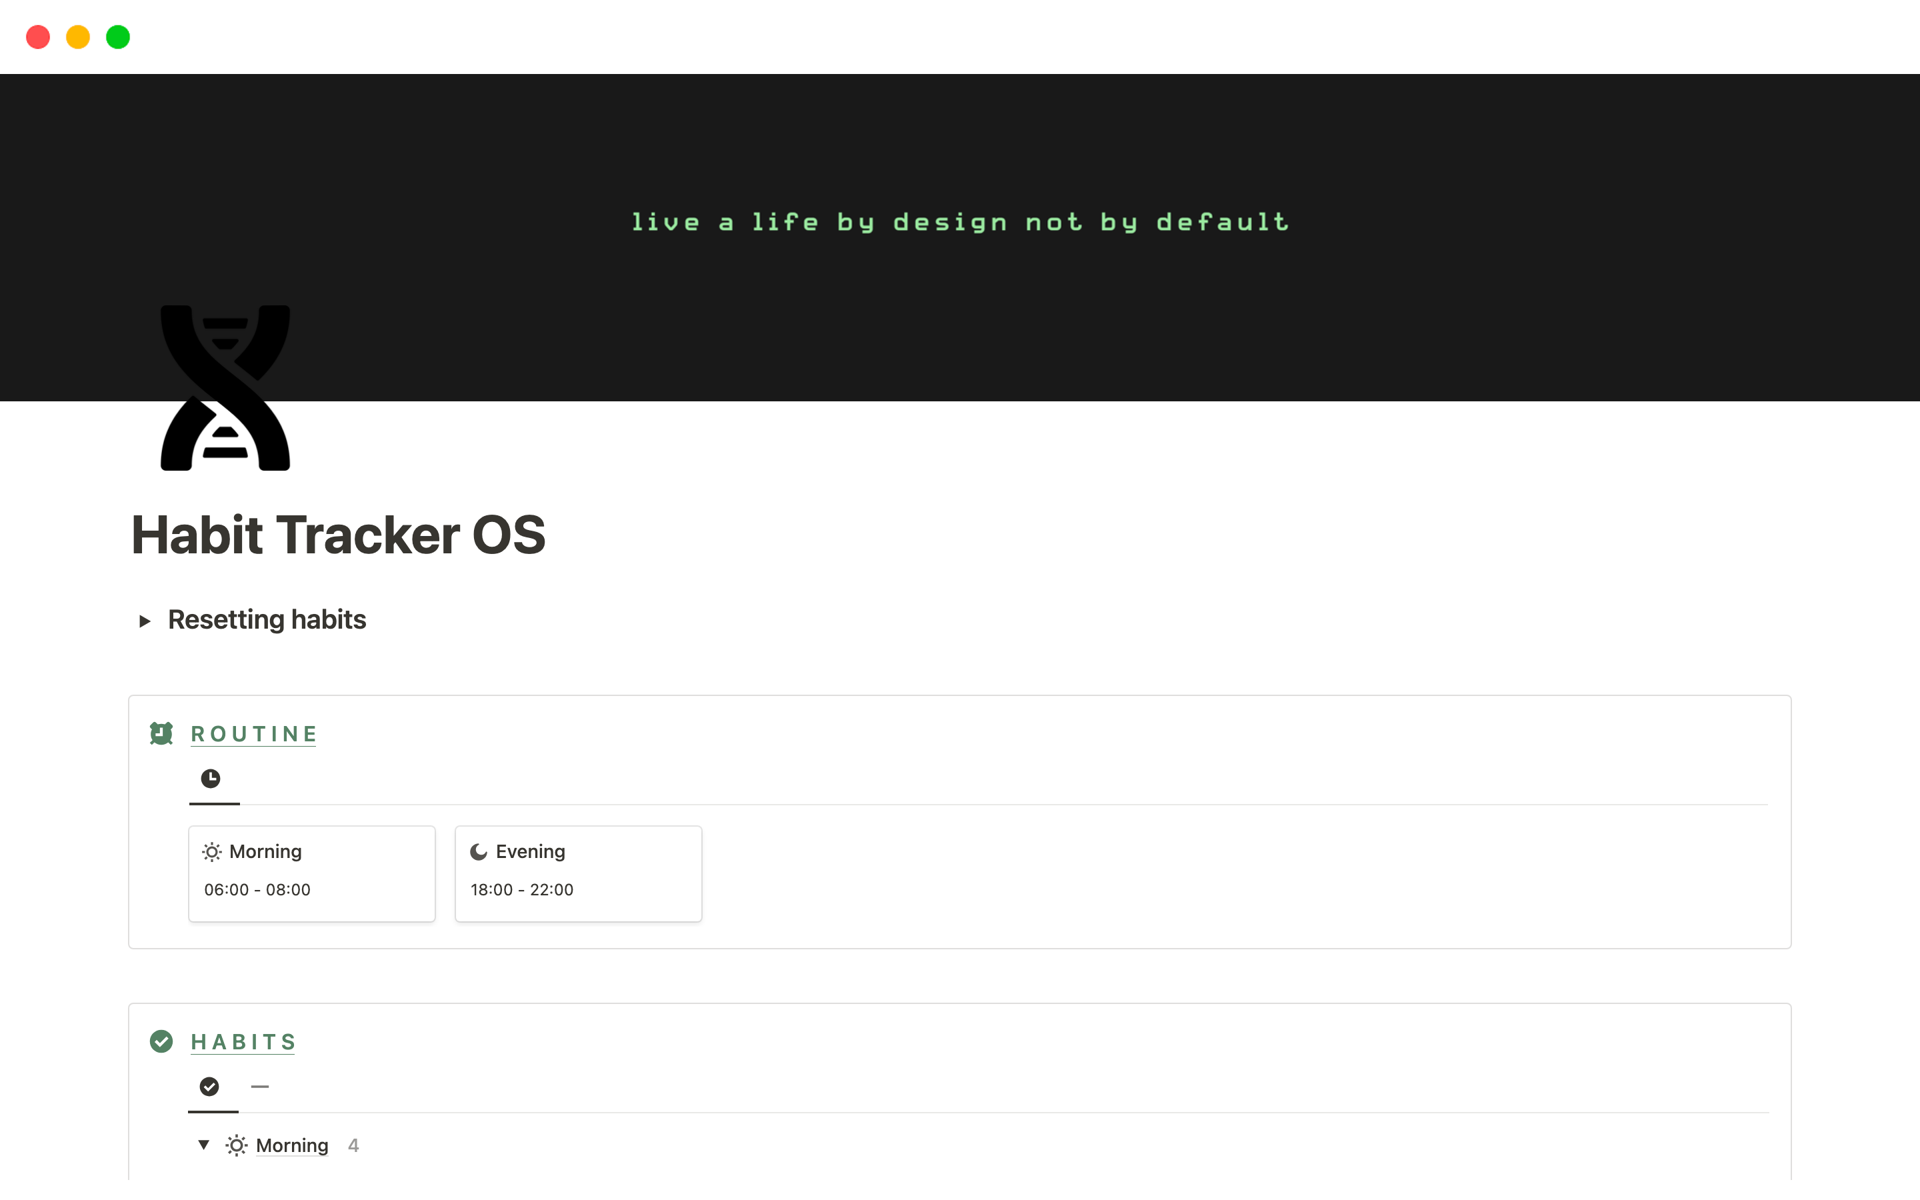 Vista previa de plantilla para Habit Tracker OS